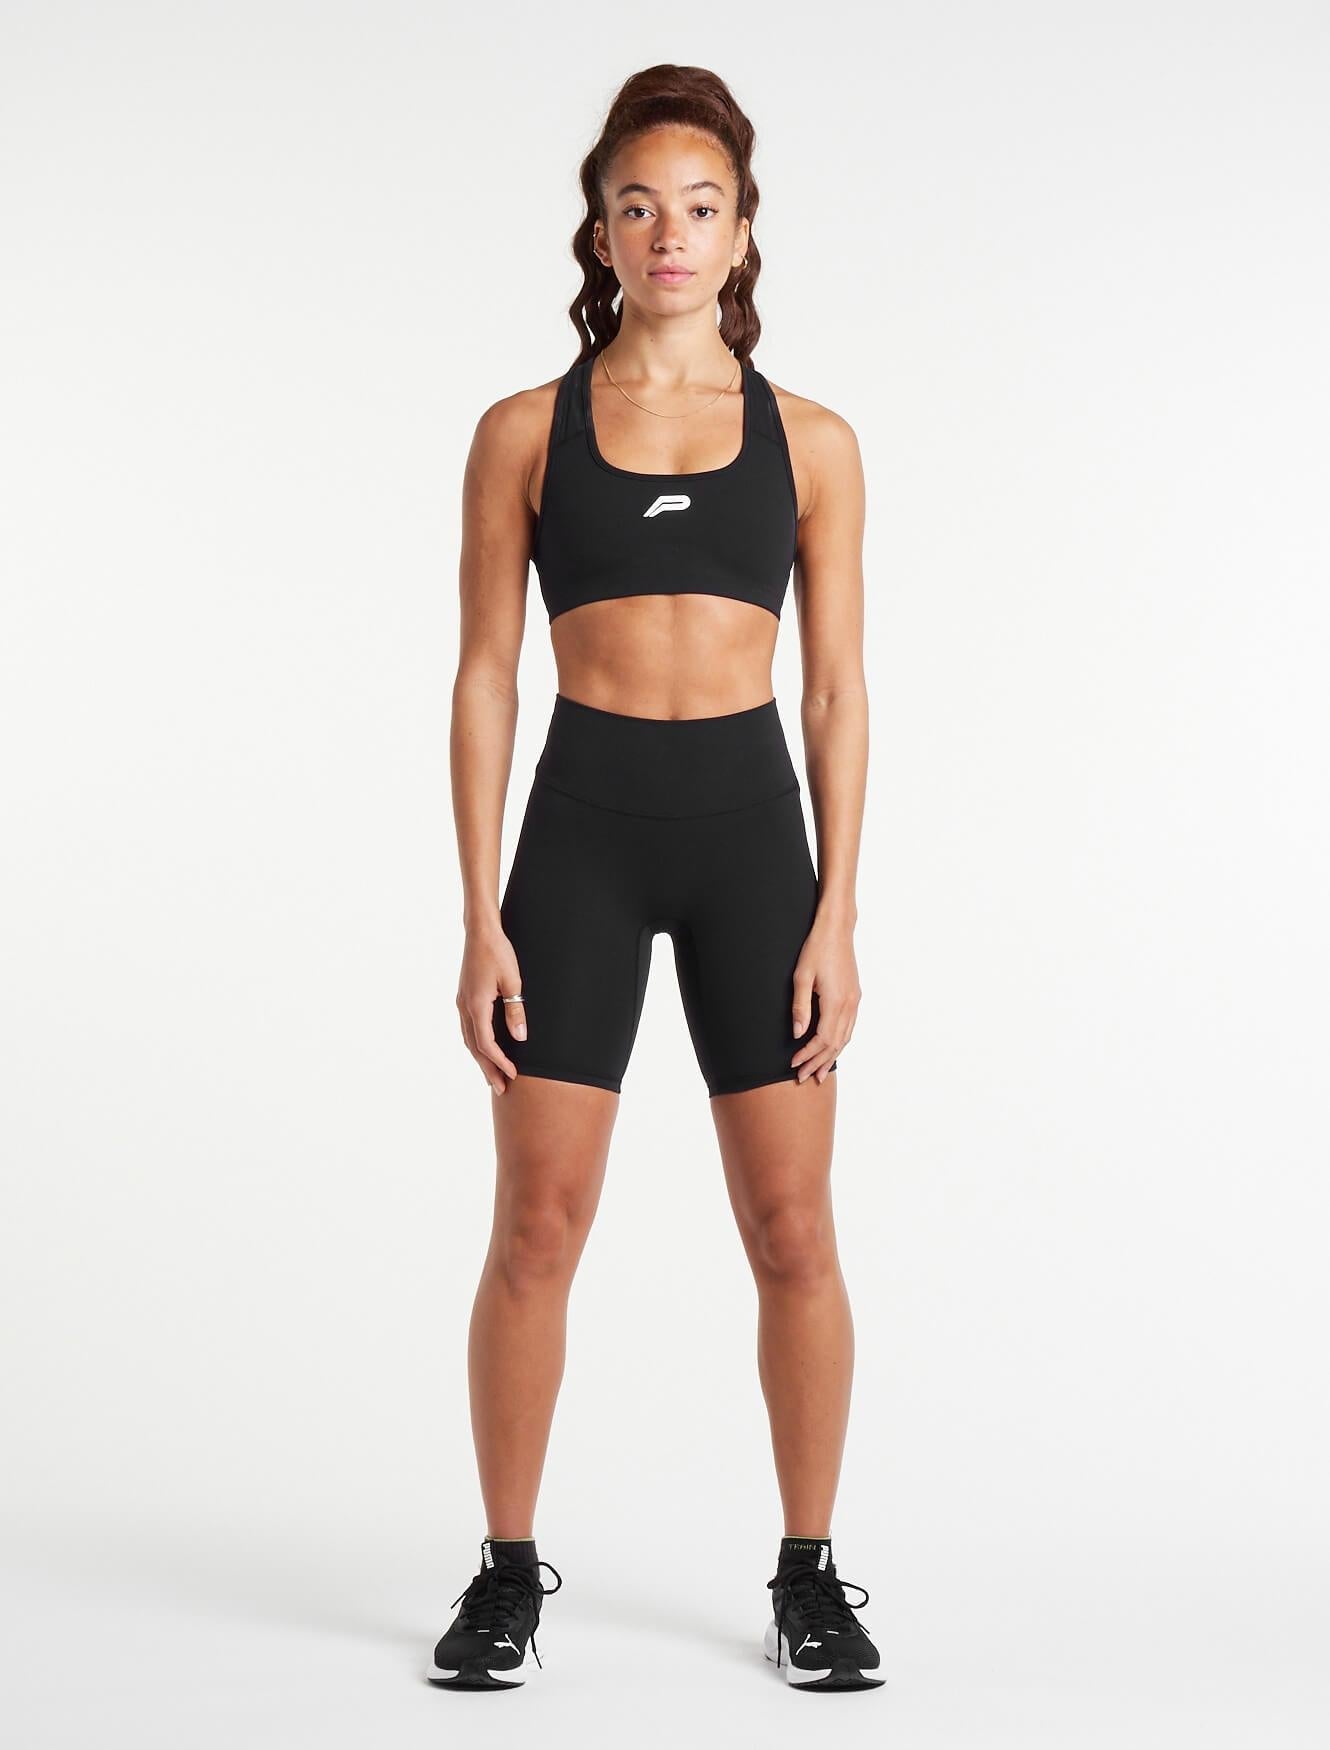 Pace Biker Shorts / Black Pursue Fitness 8